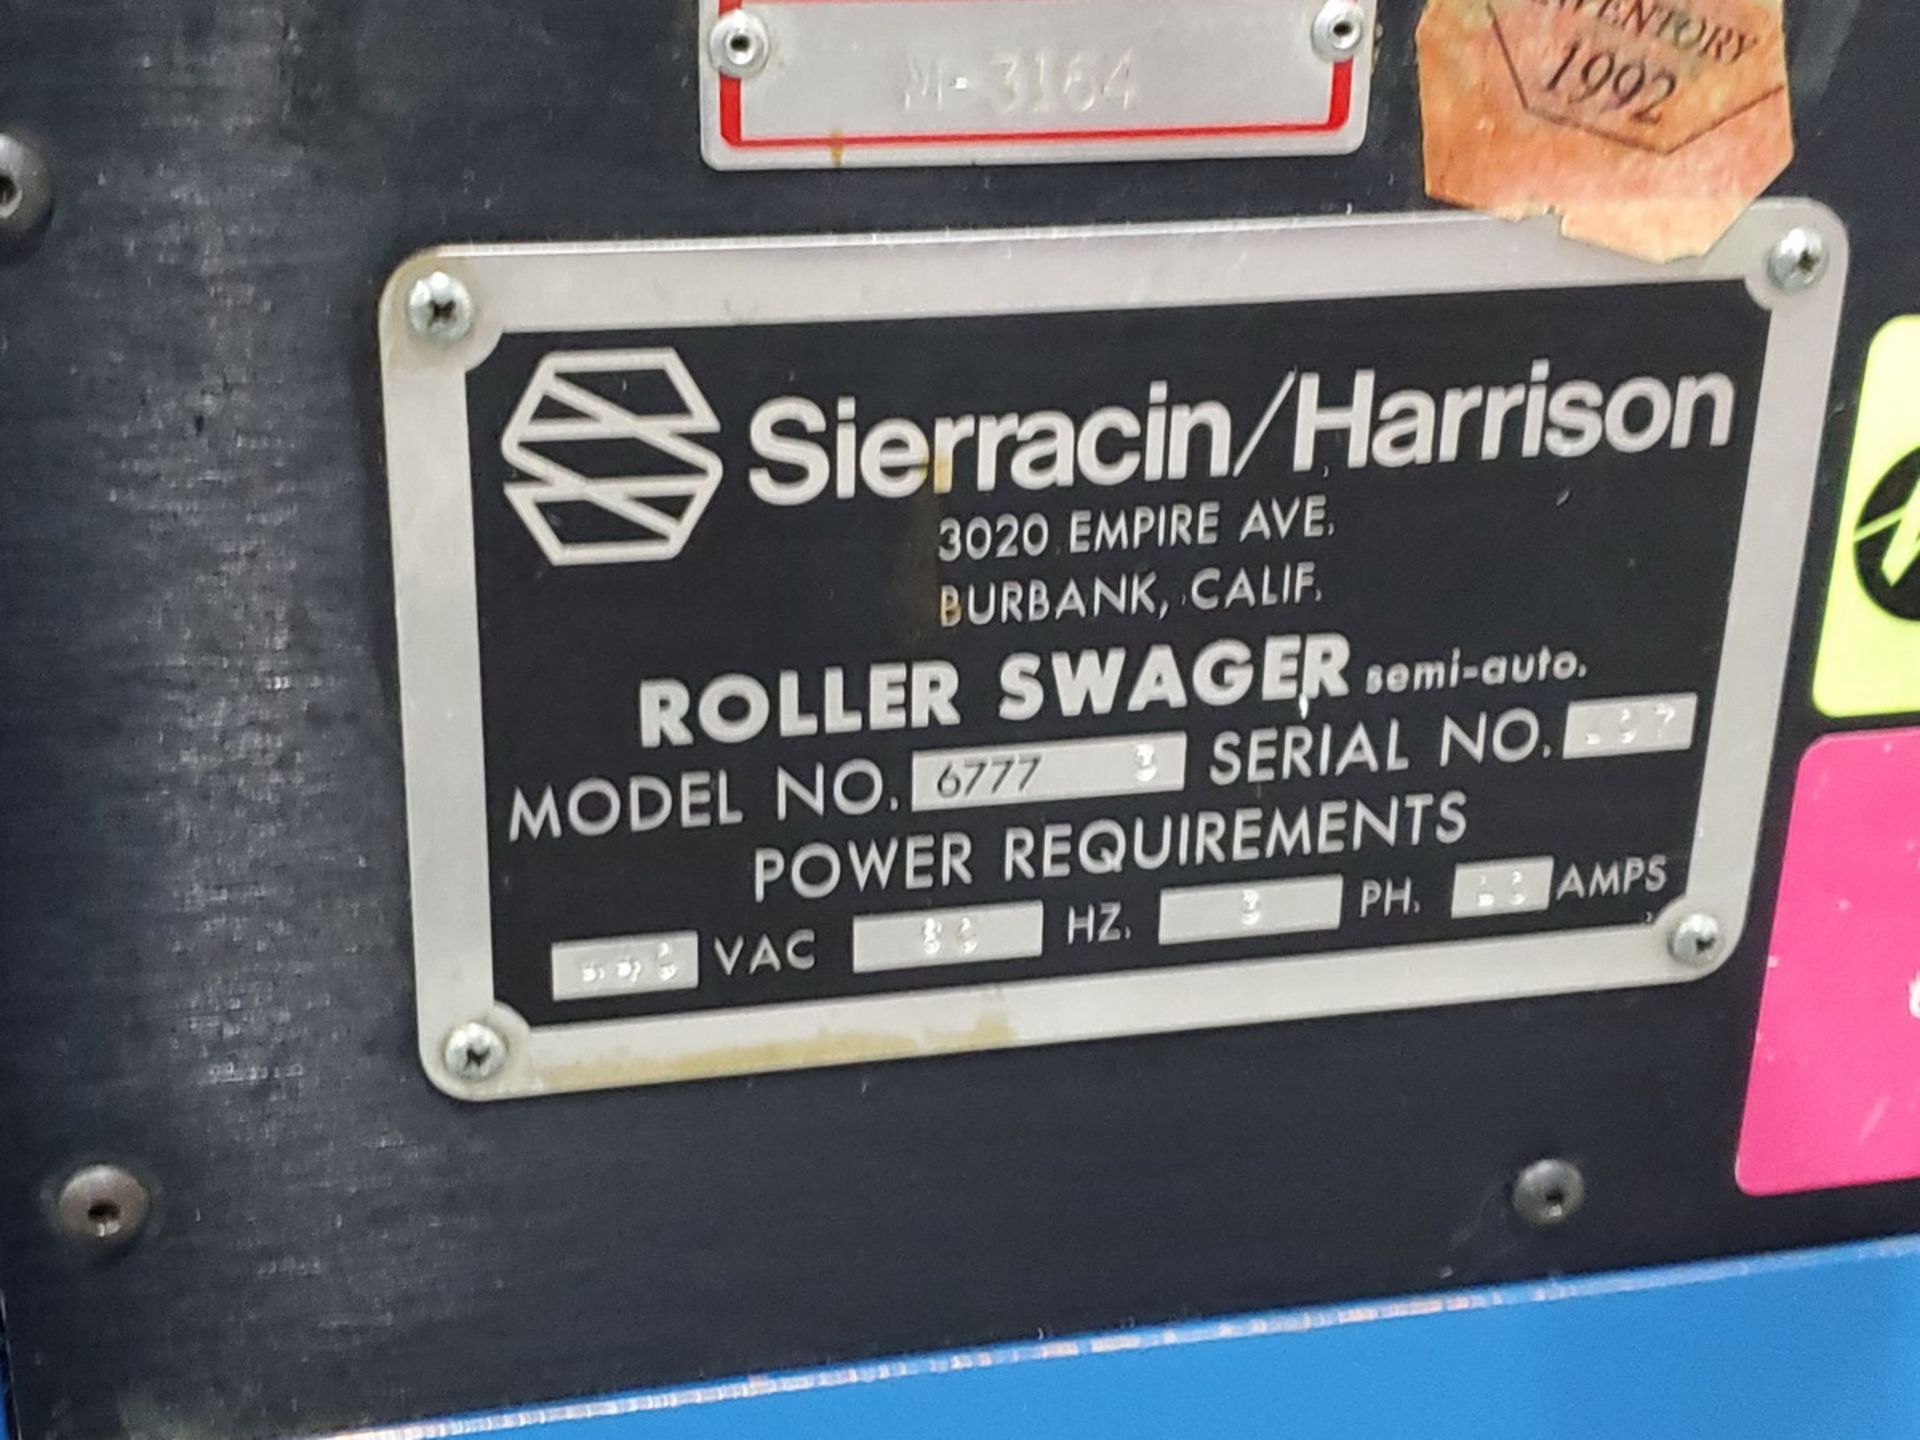 Sierracin/Harrison 6777-3 Roller Swager 480V, 3PH, 60HZ, 10A - Image 7 of 7